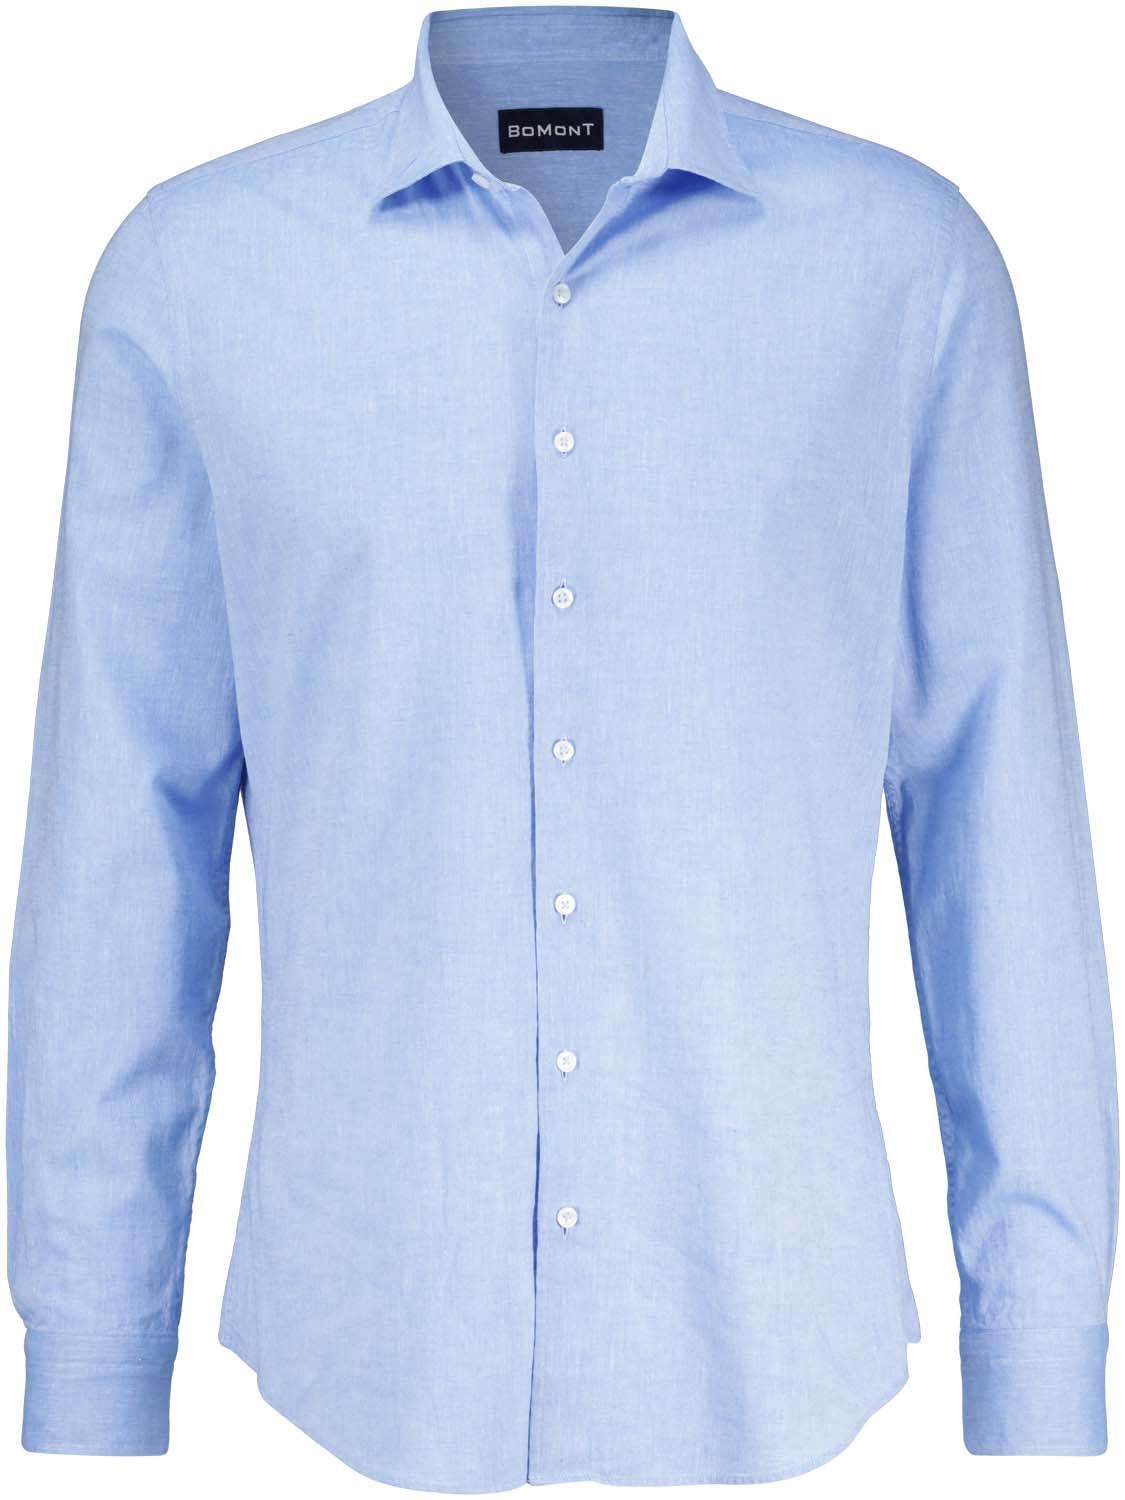 BMT 4S1034 linen/cotton overhemd Blauw